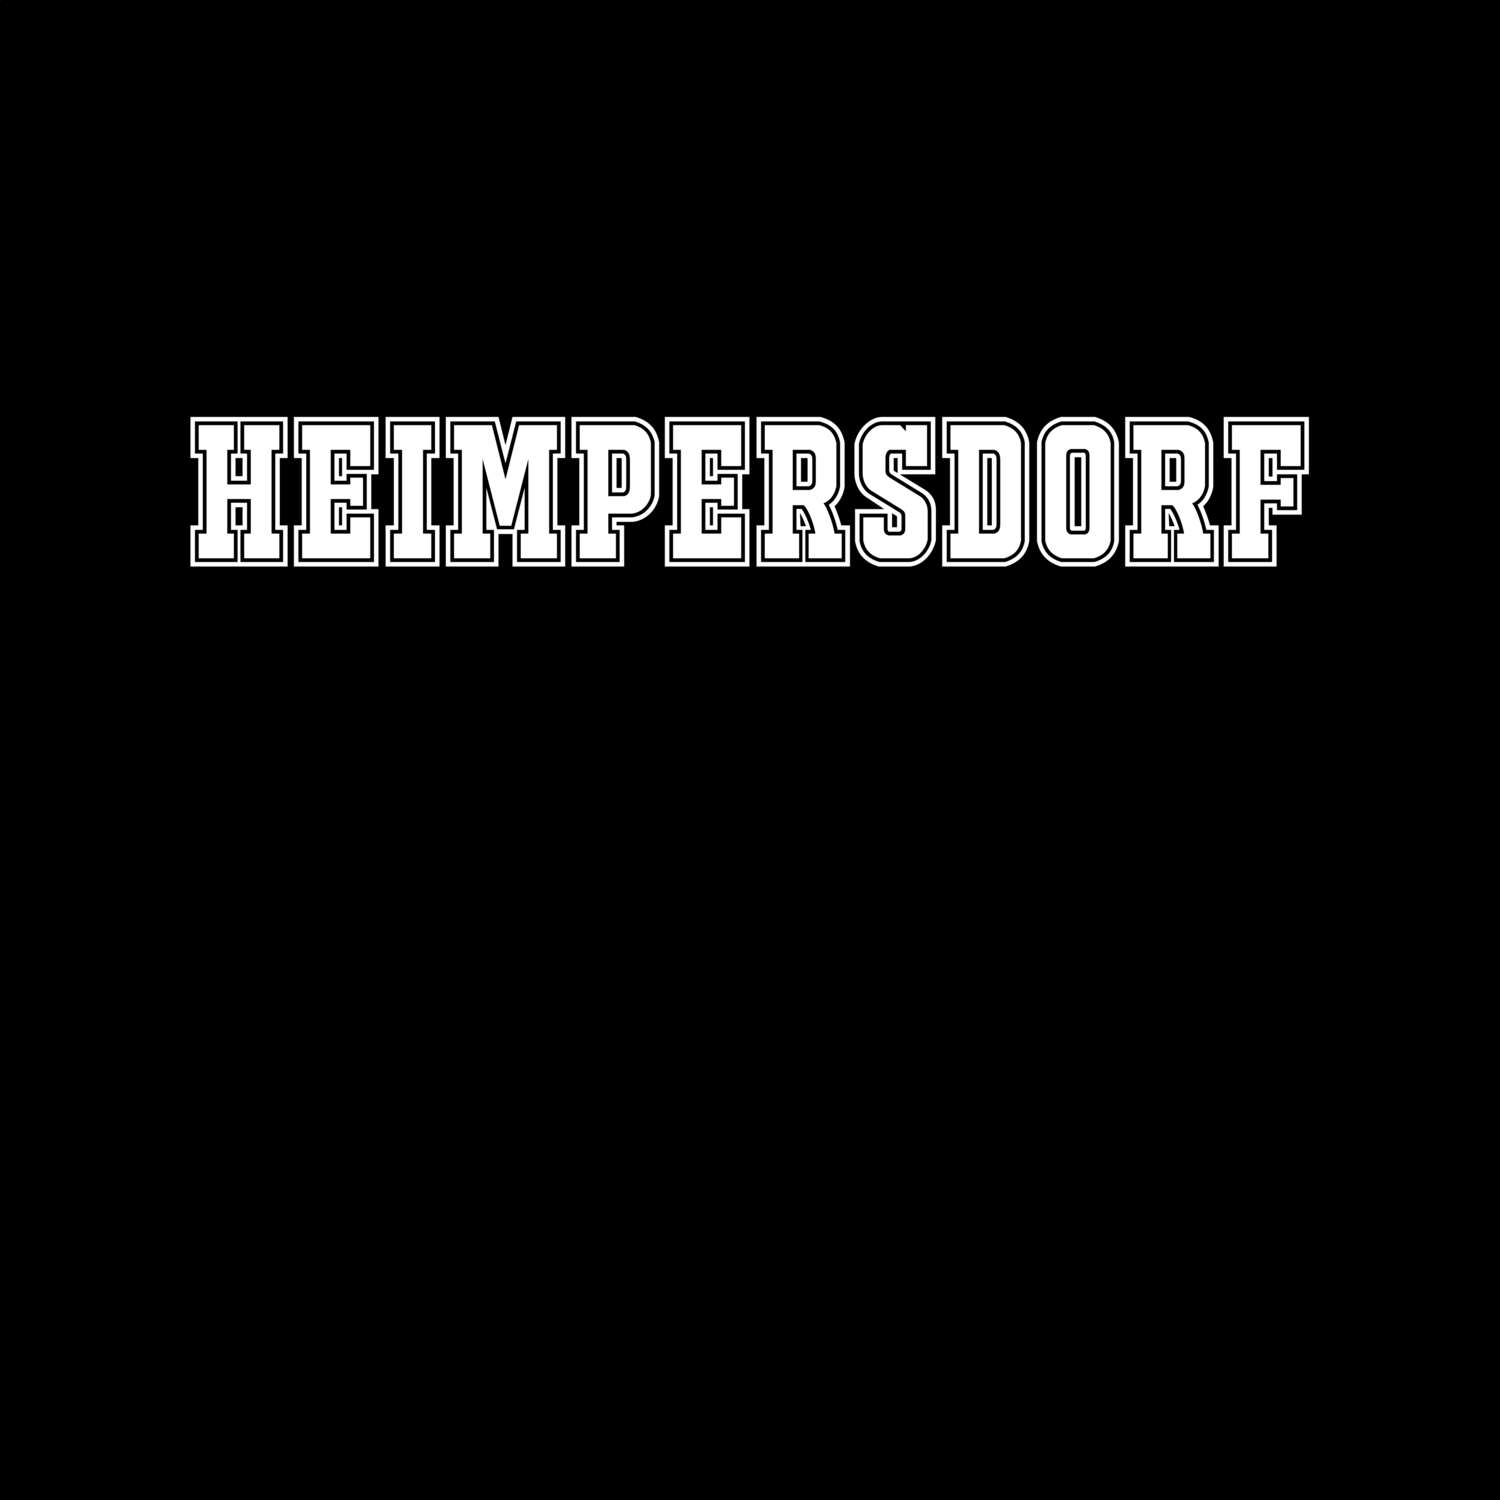 Heimpersdorf T-Shirt »Classic«